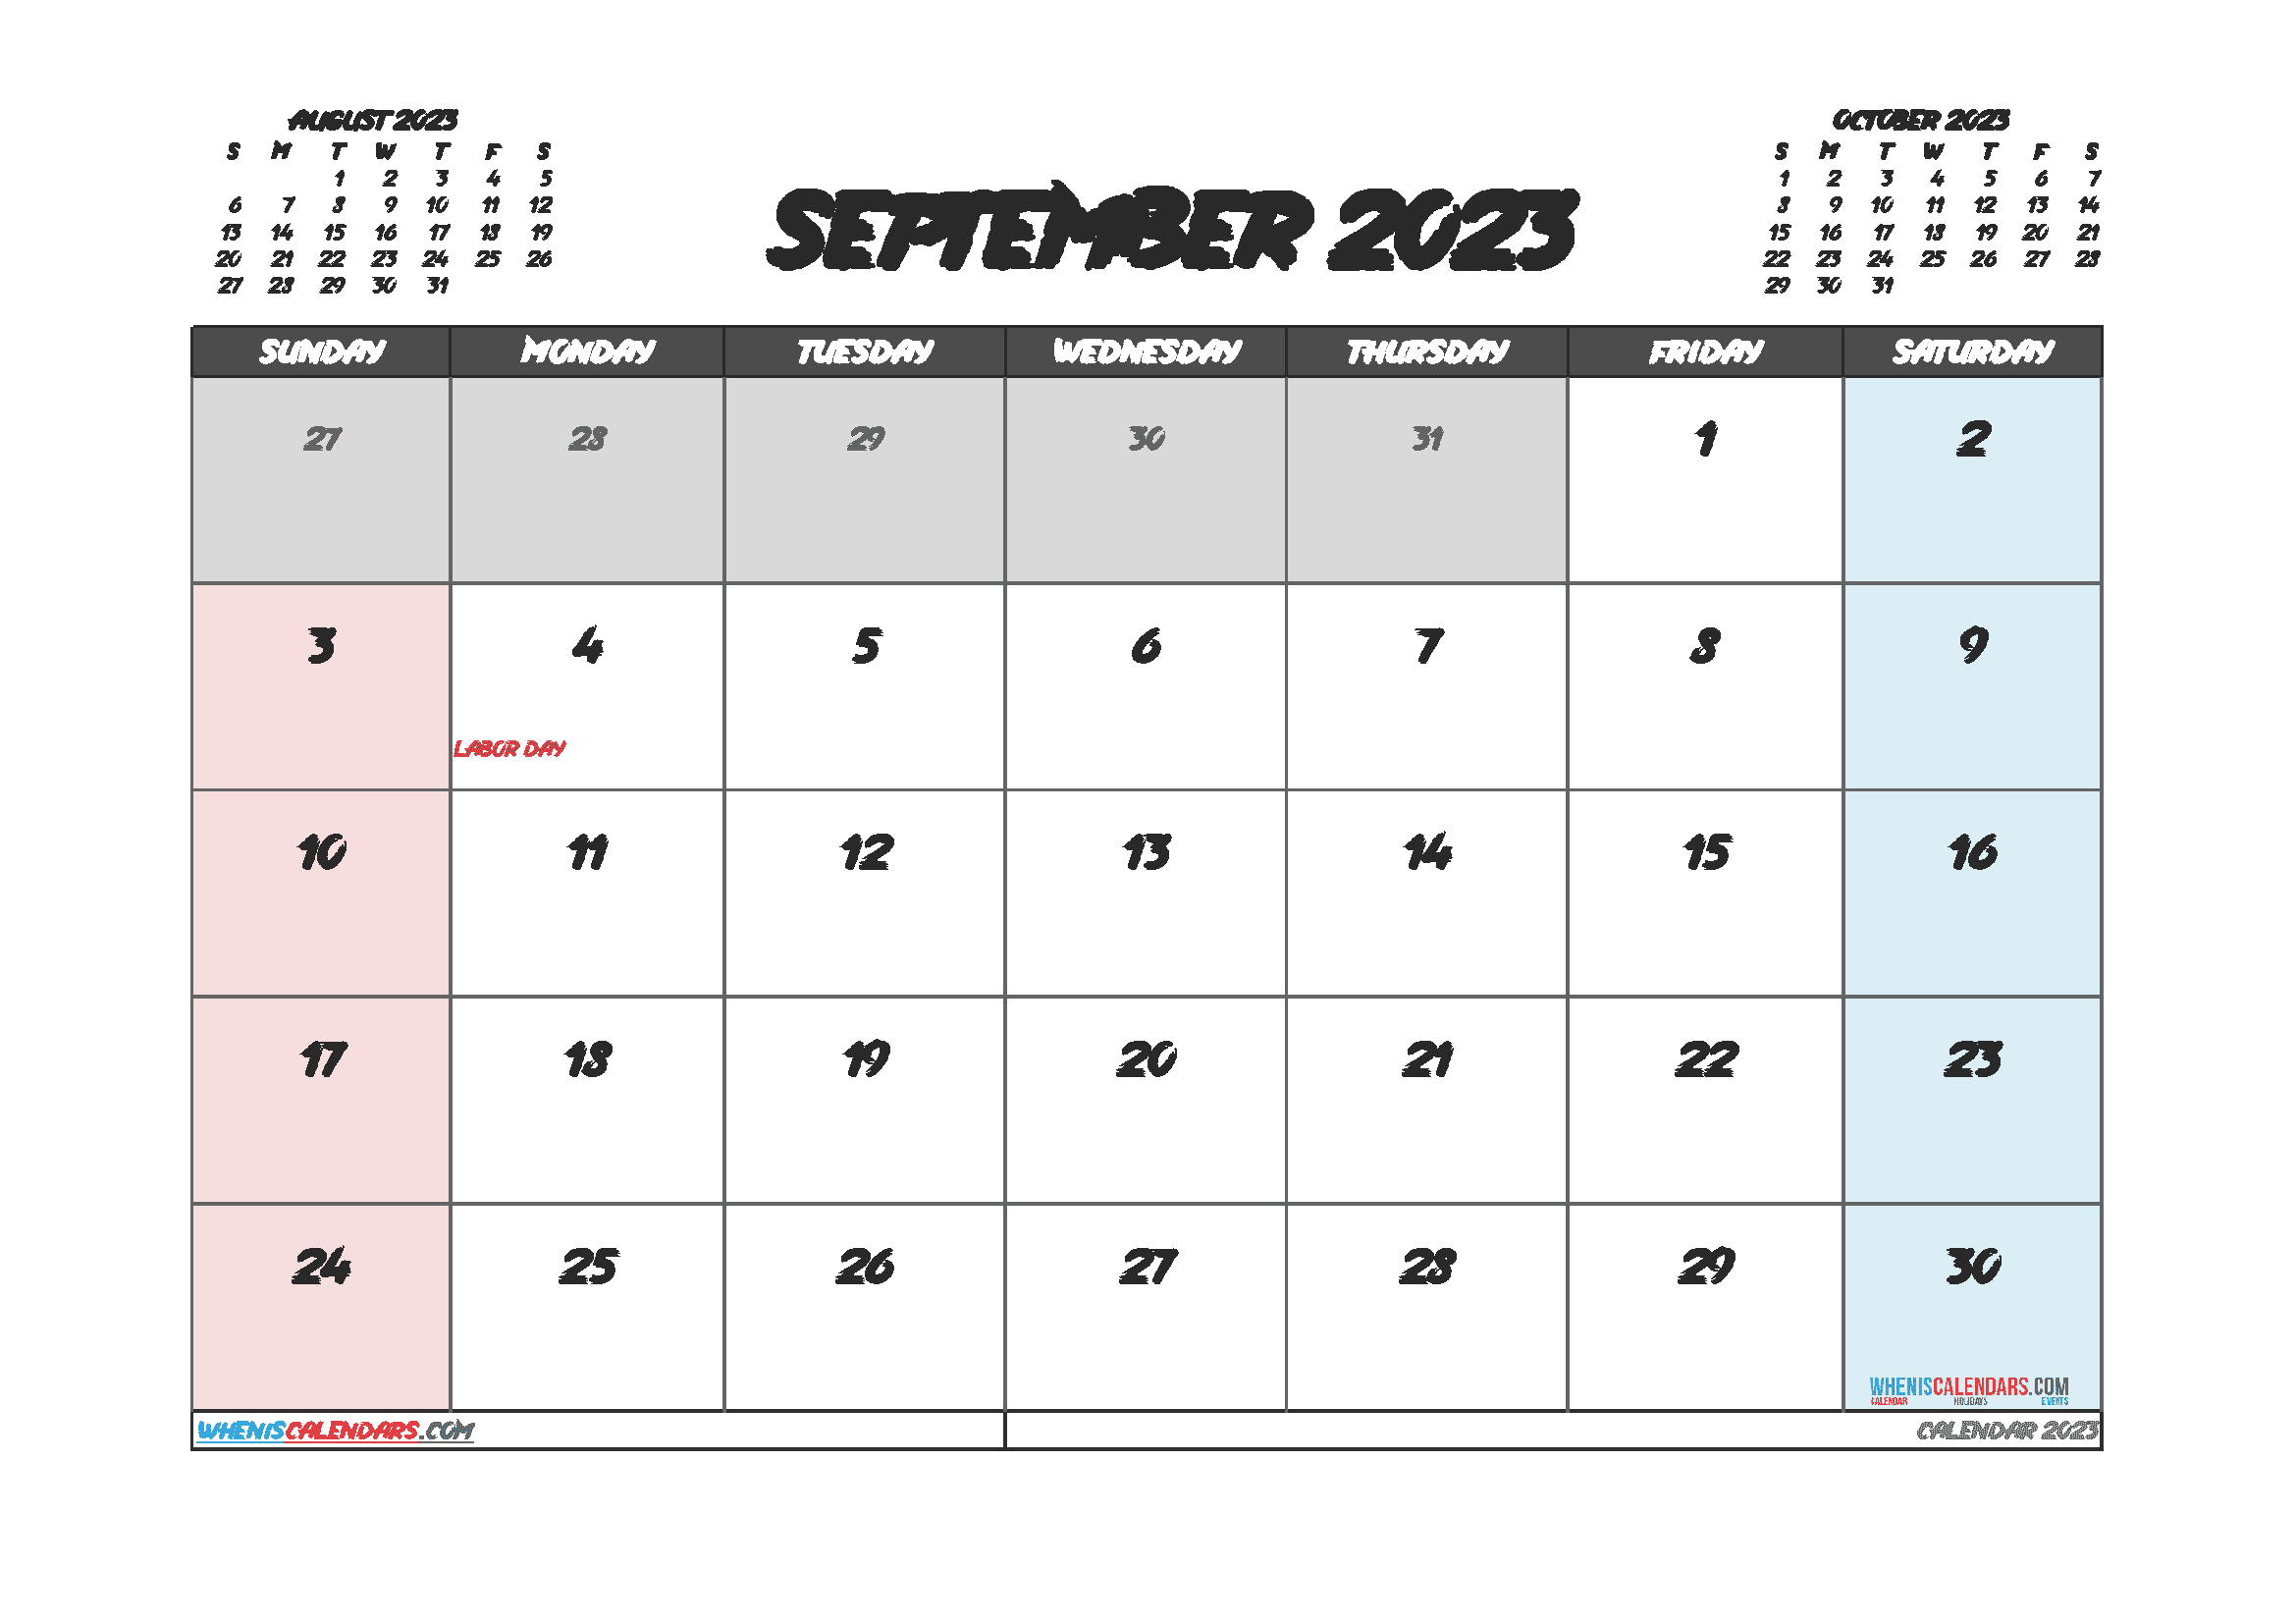 Free 2023 Calendar September Printable